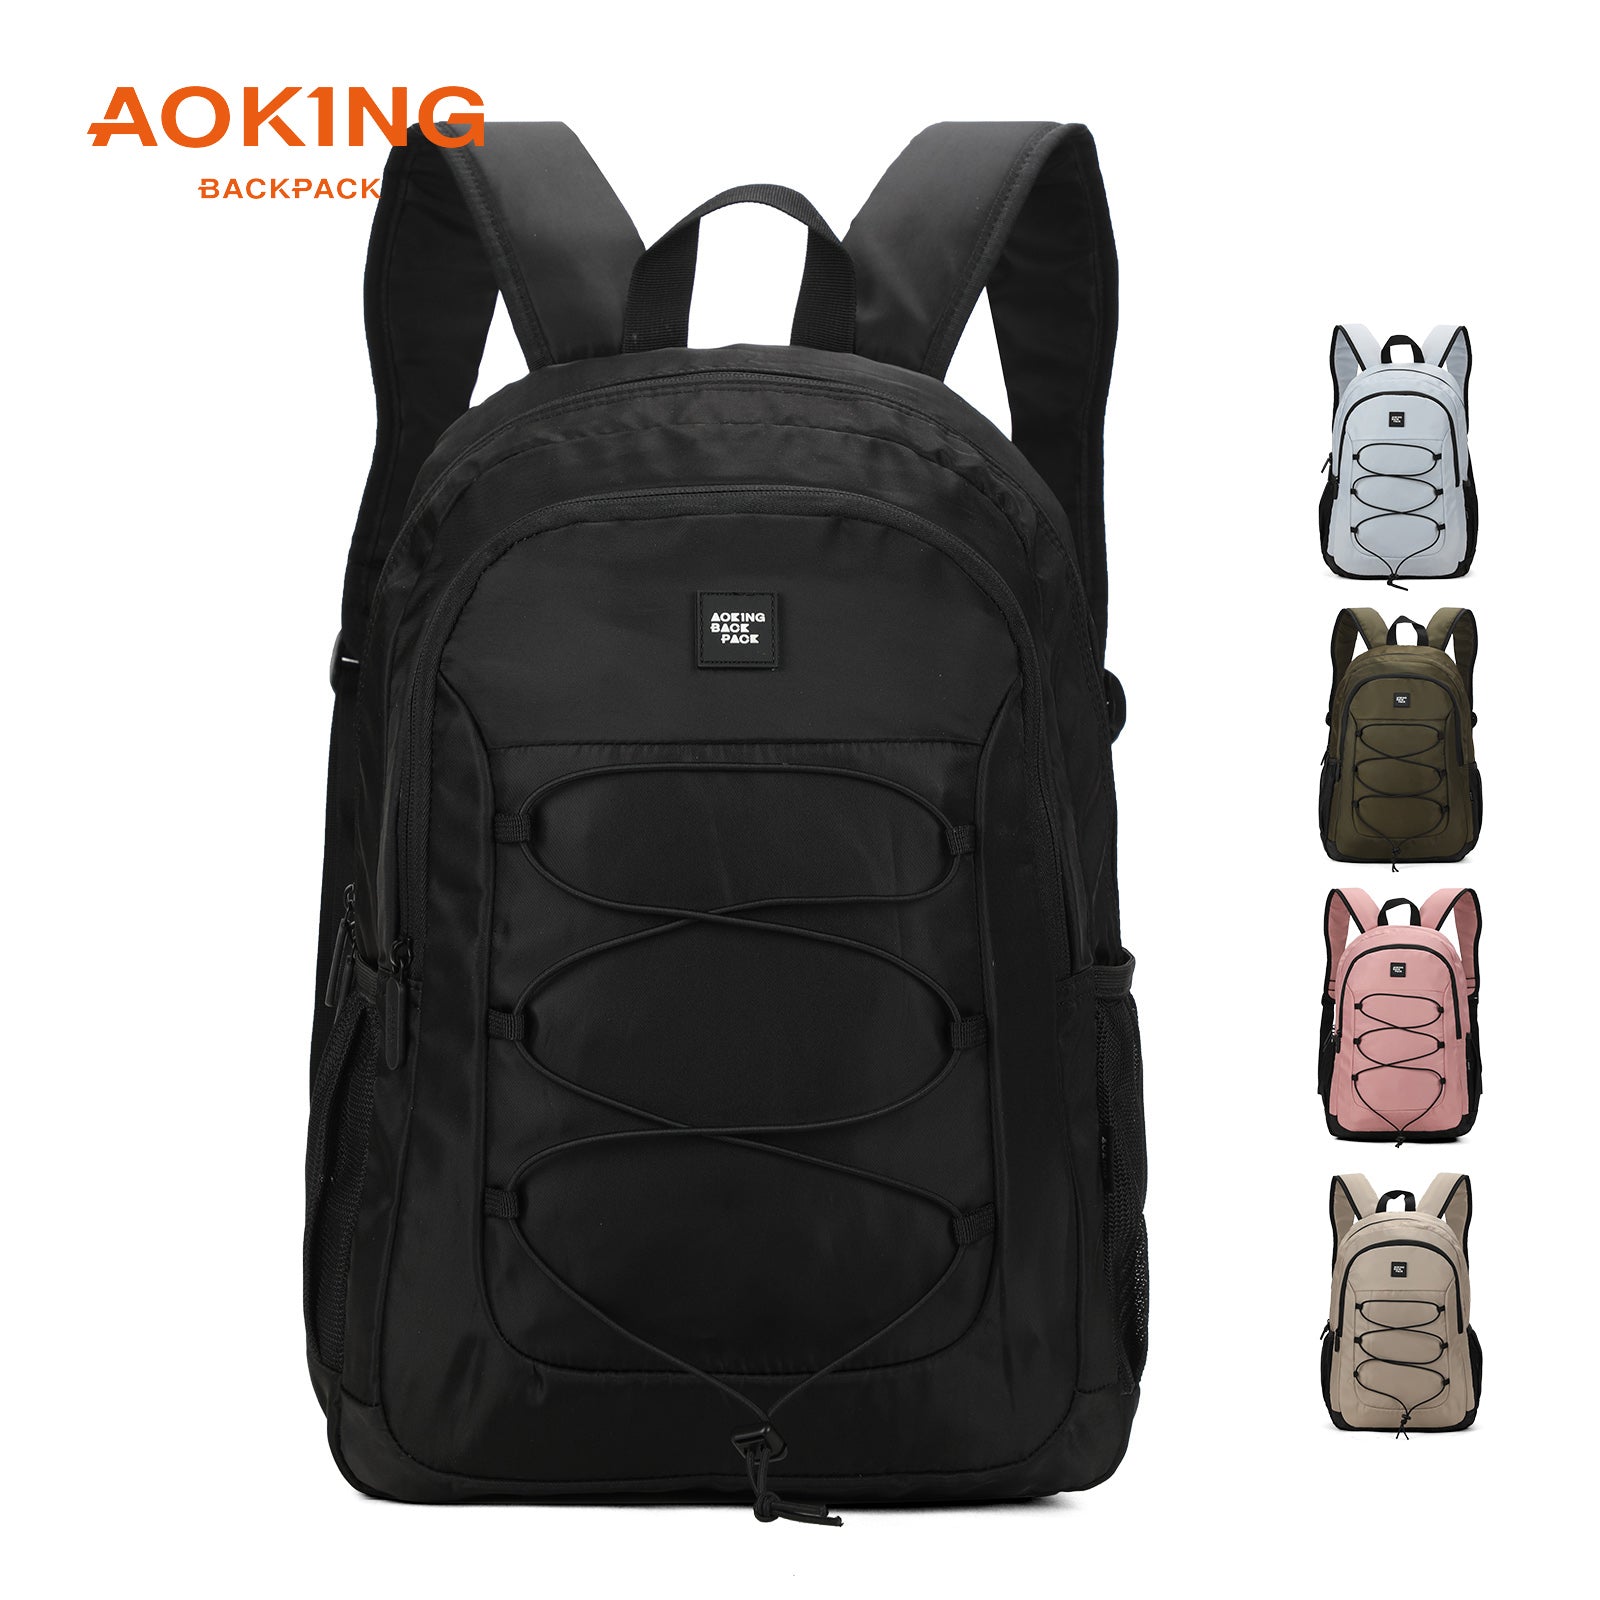 Aoking Backpack Casual Backpack Student Bag XN3303-5